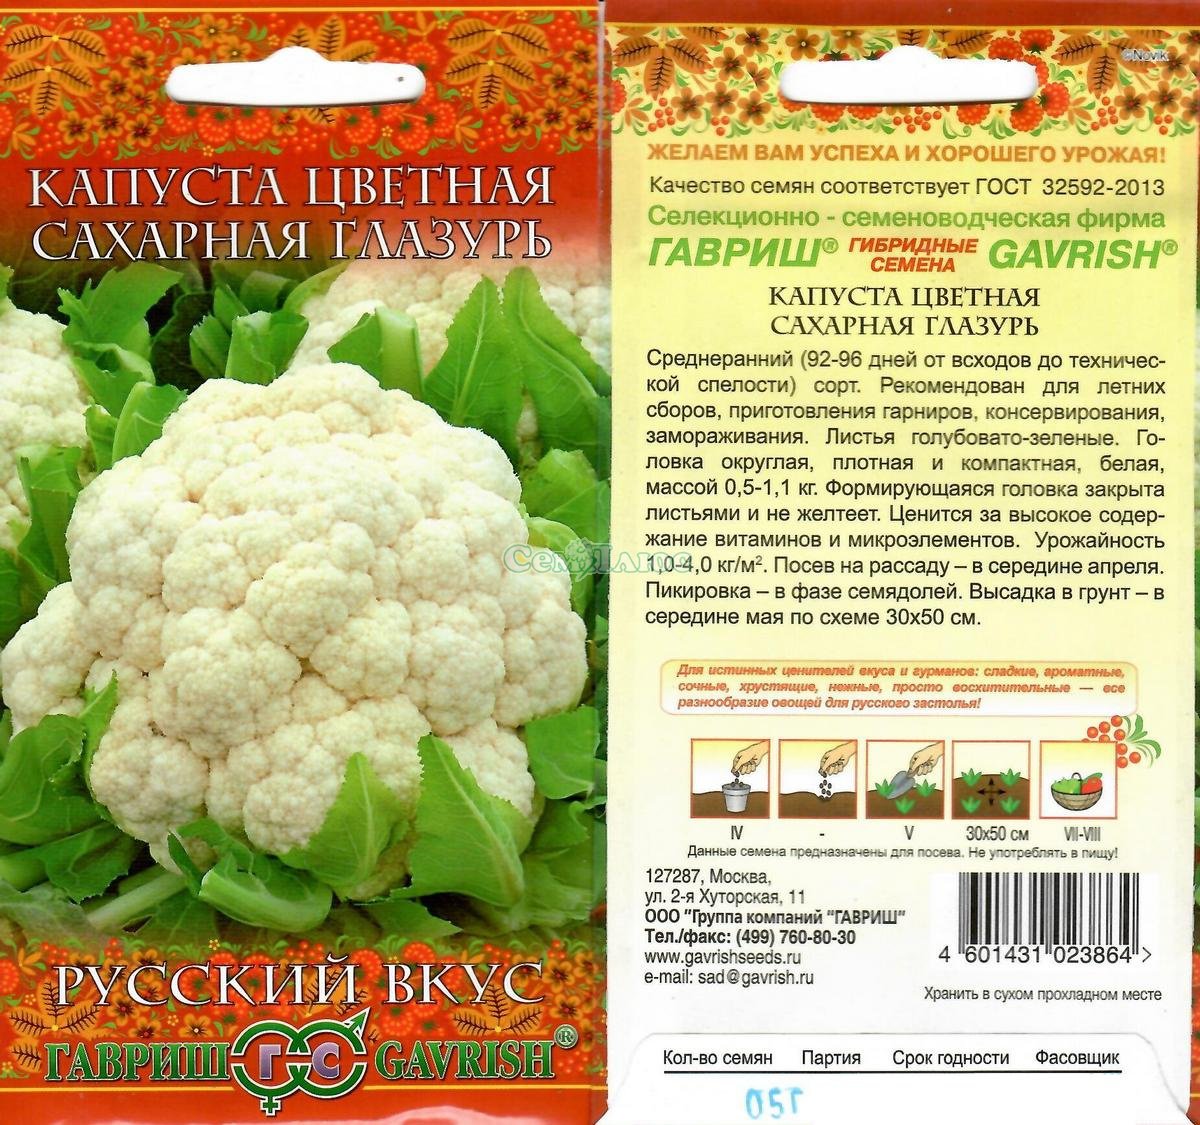 Семена Гавриш русский вкус капуста цветная сахарная глазурь 0,5 г